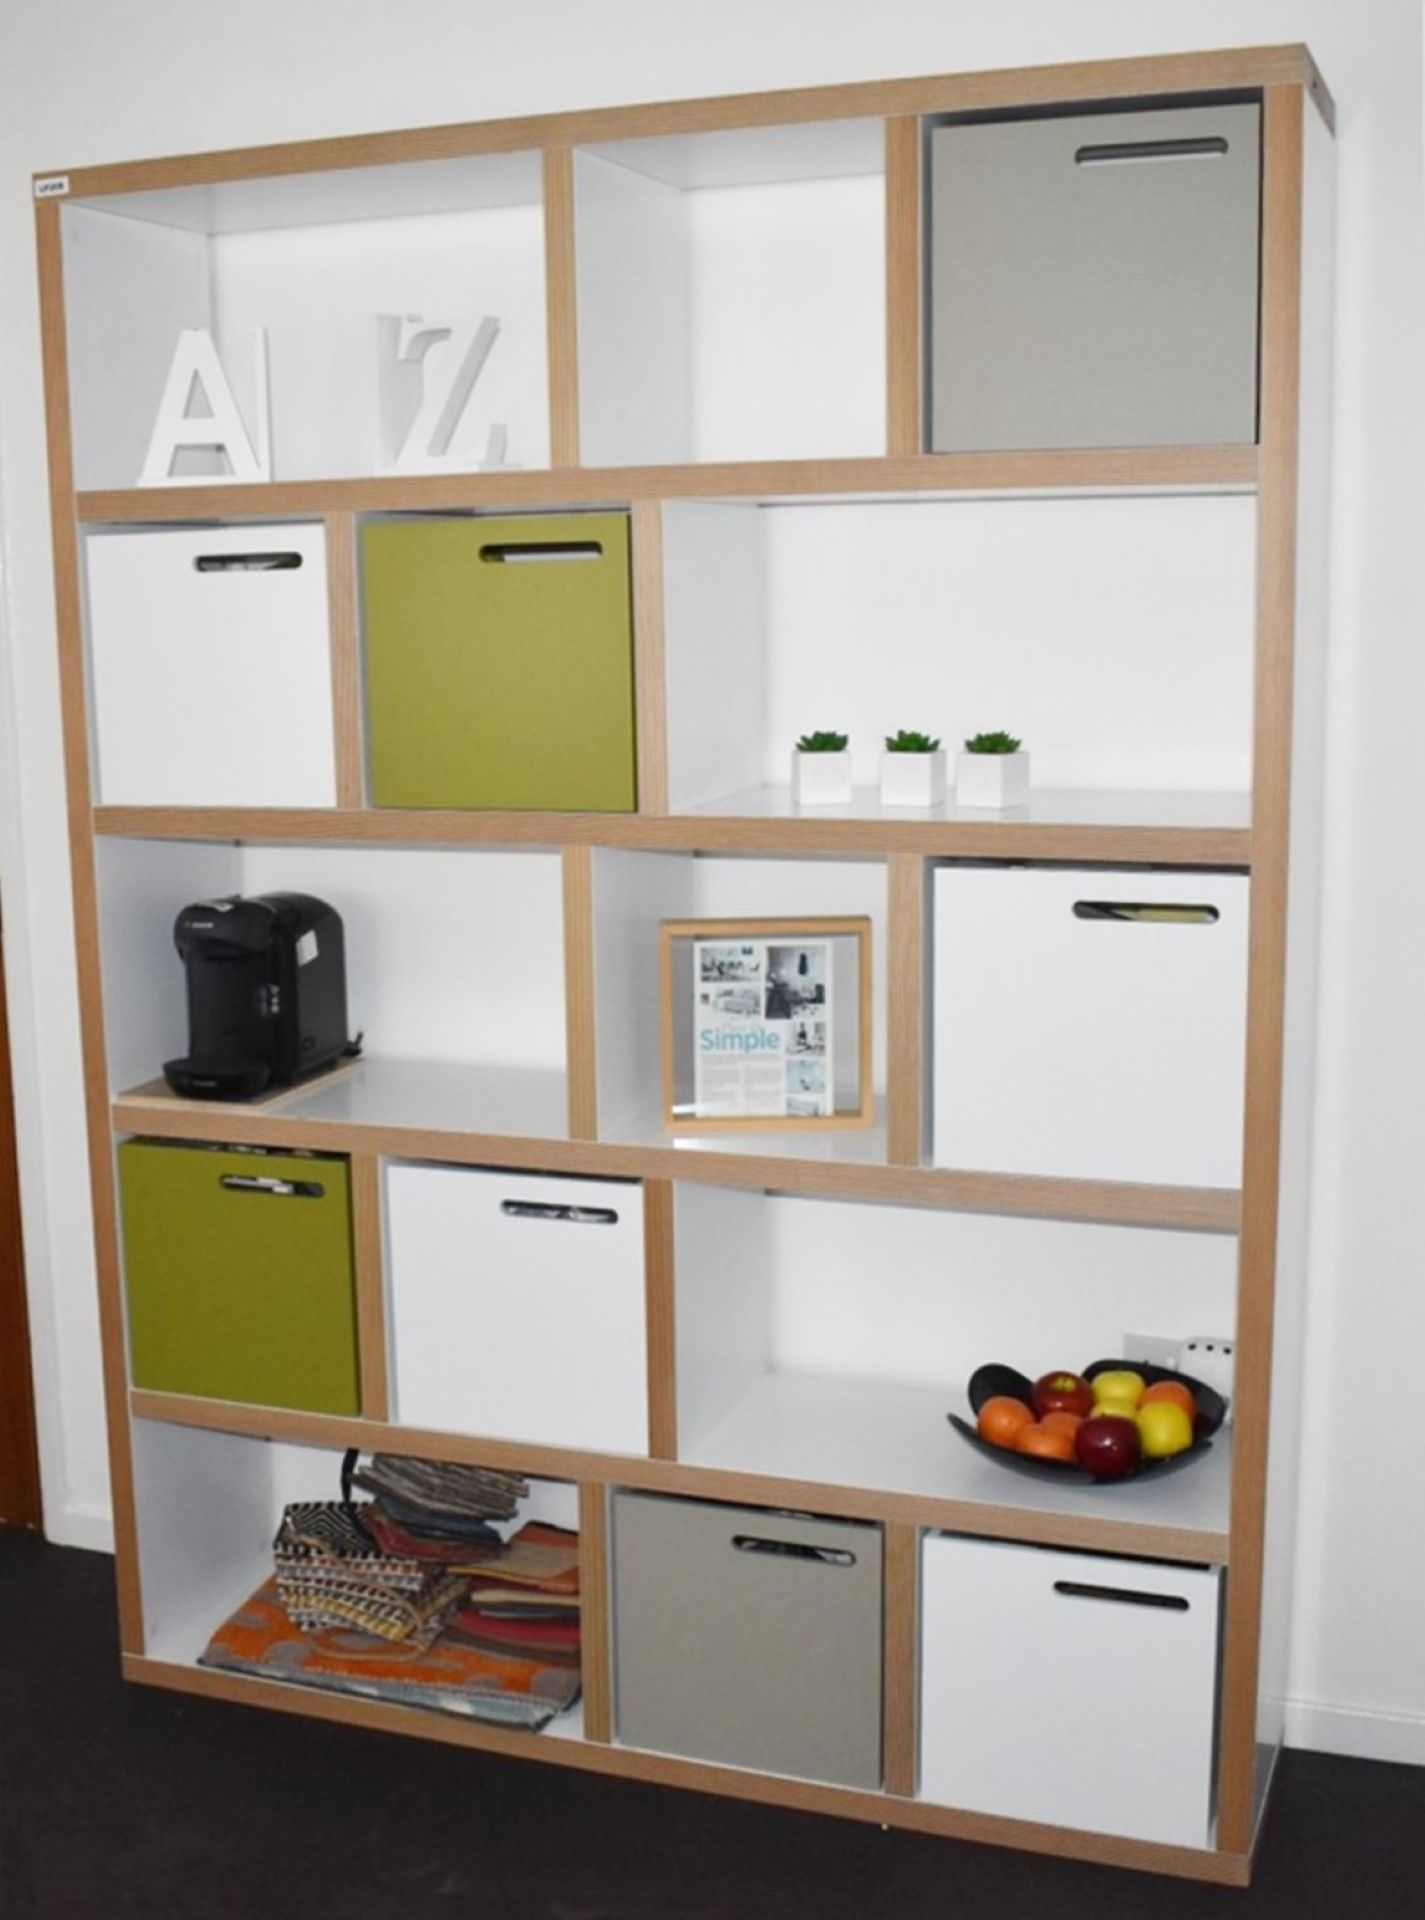 1 x Designer Cube Shelf Bookcase Unit in Gloss White With 8 x Storage Boxes